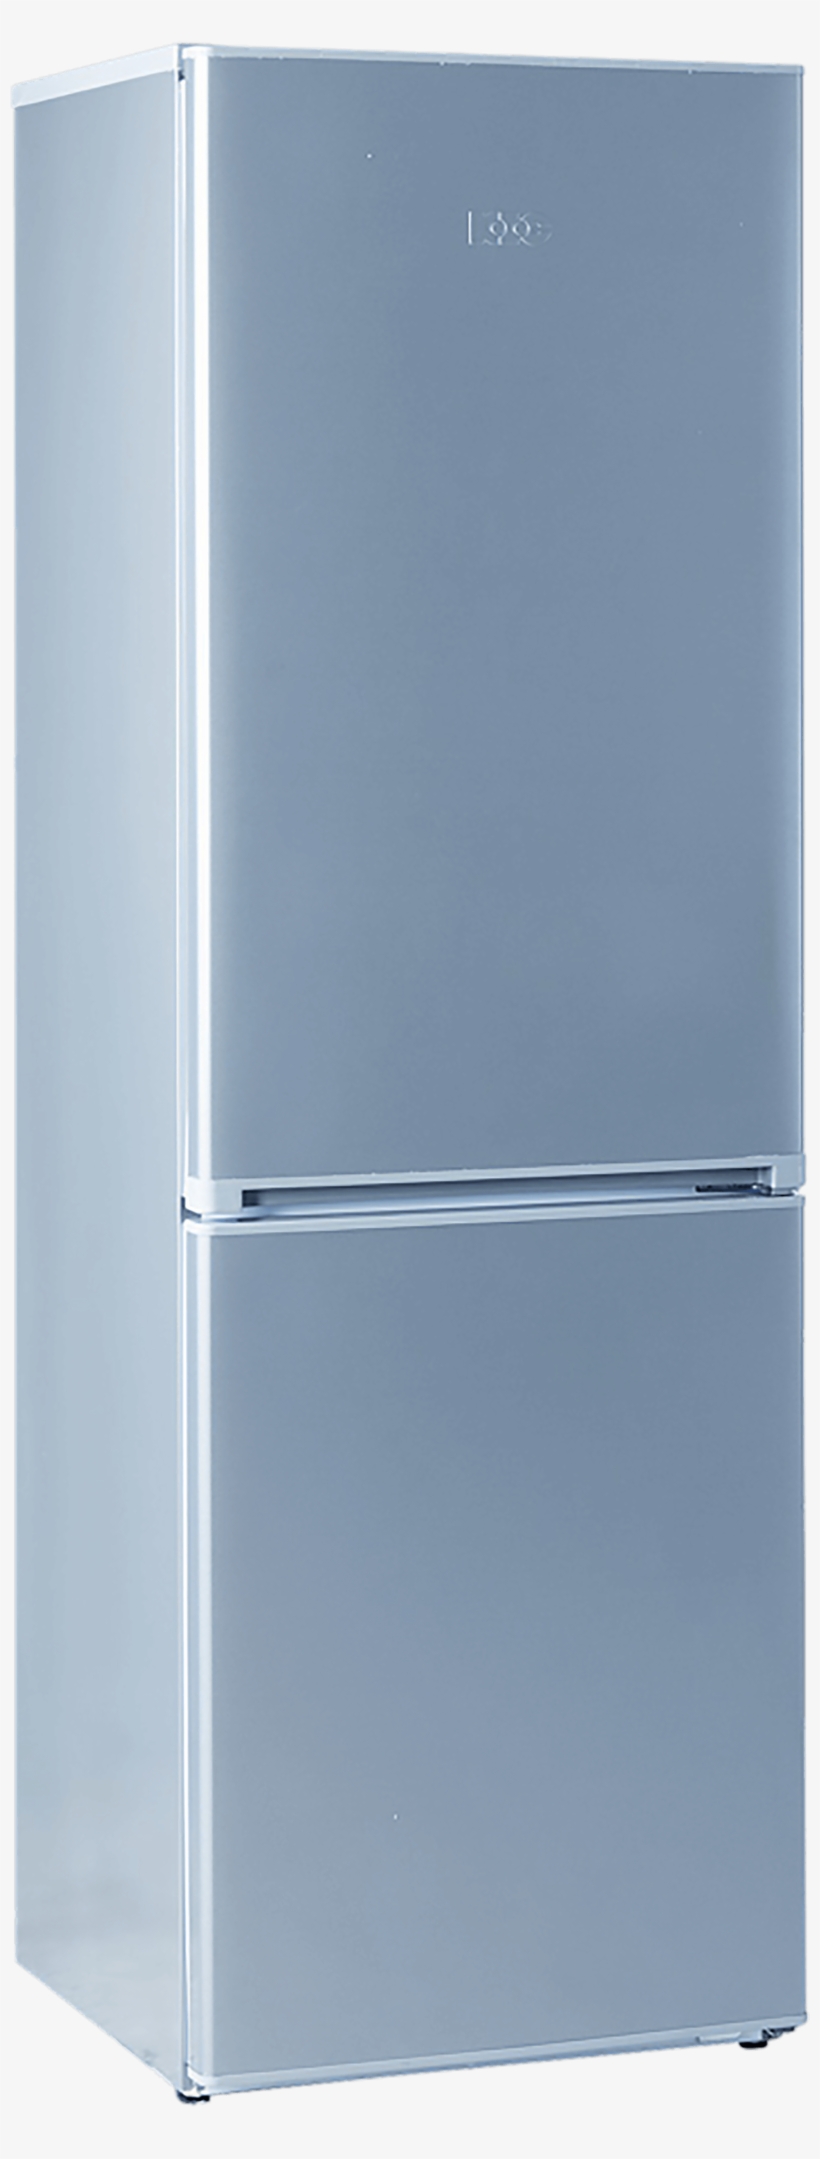 Two Door Refrigerator Png File - Kic 336 Litre Fridge, transparent png #863730